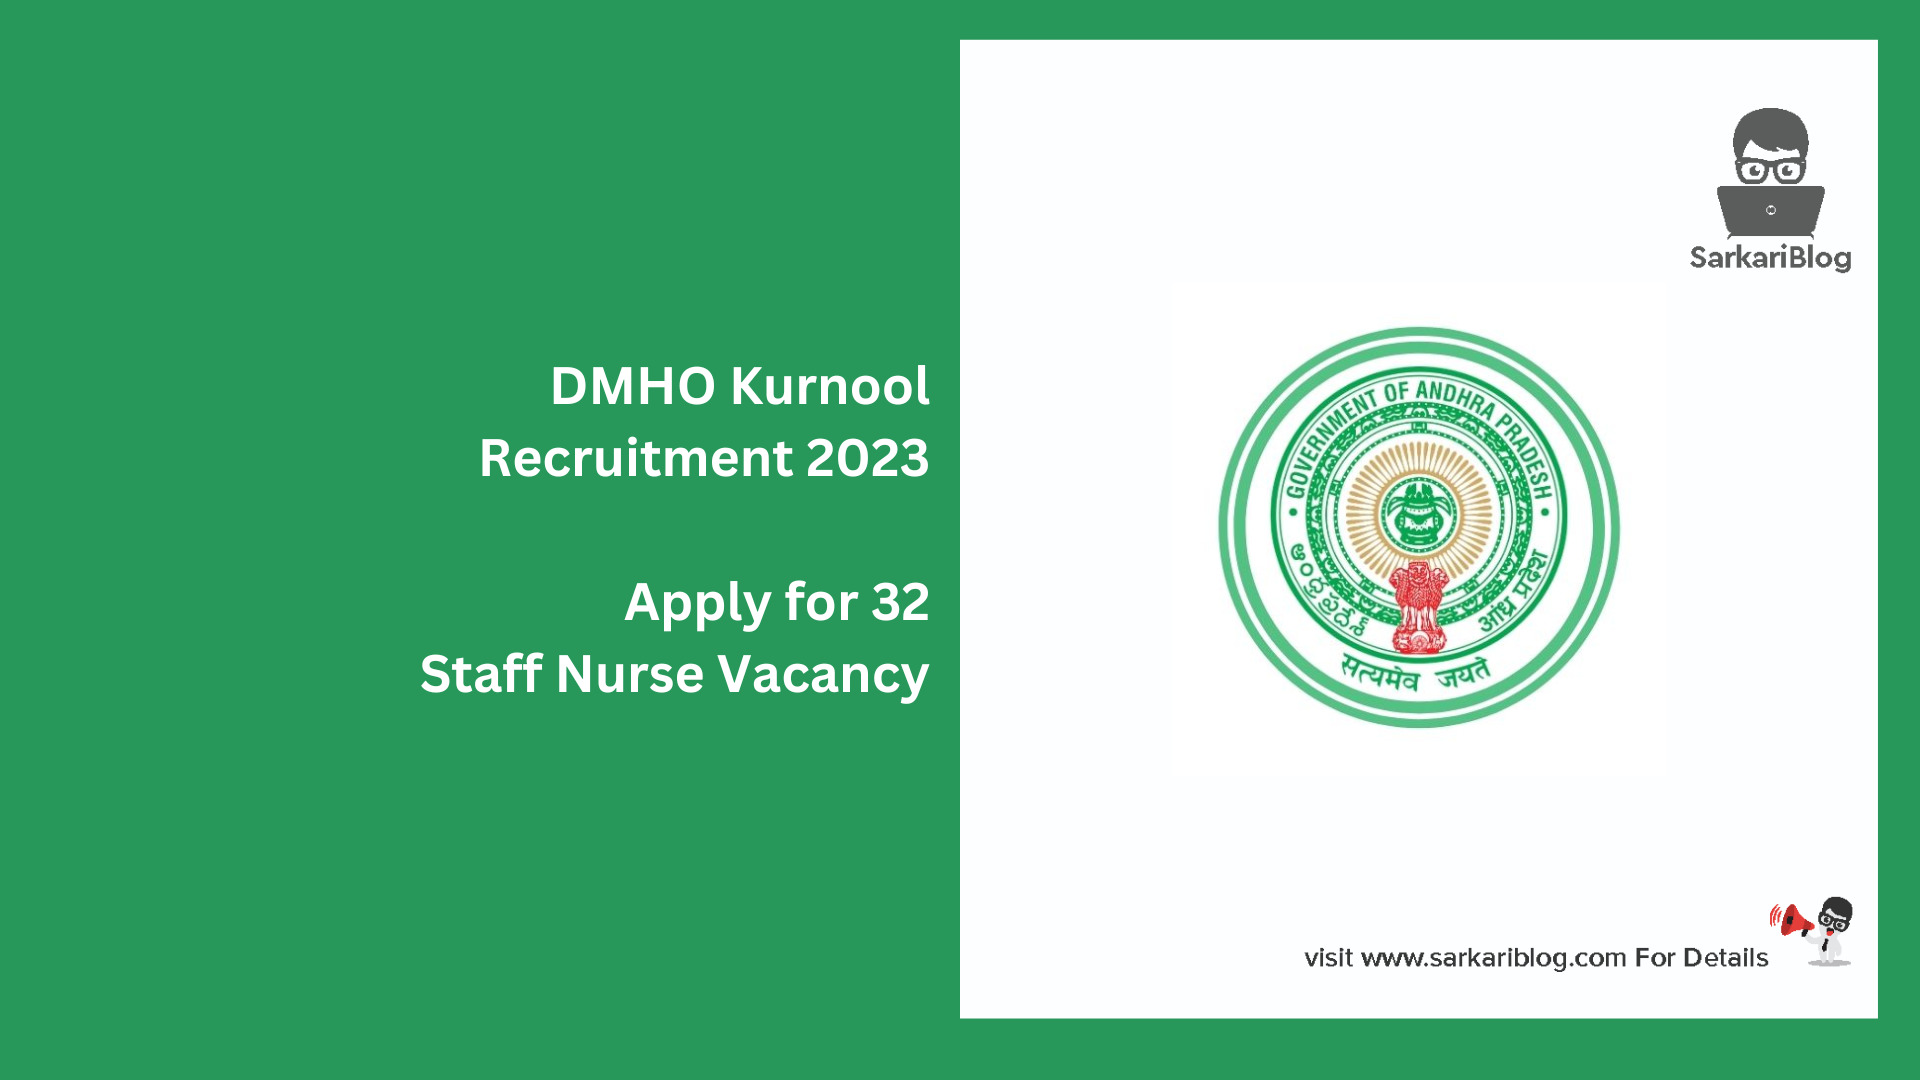 DMHO Kurnool Recruitment 2023